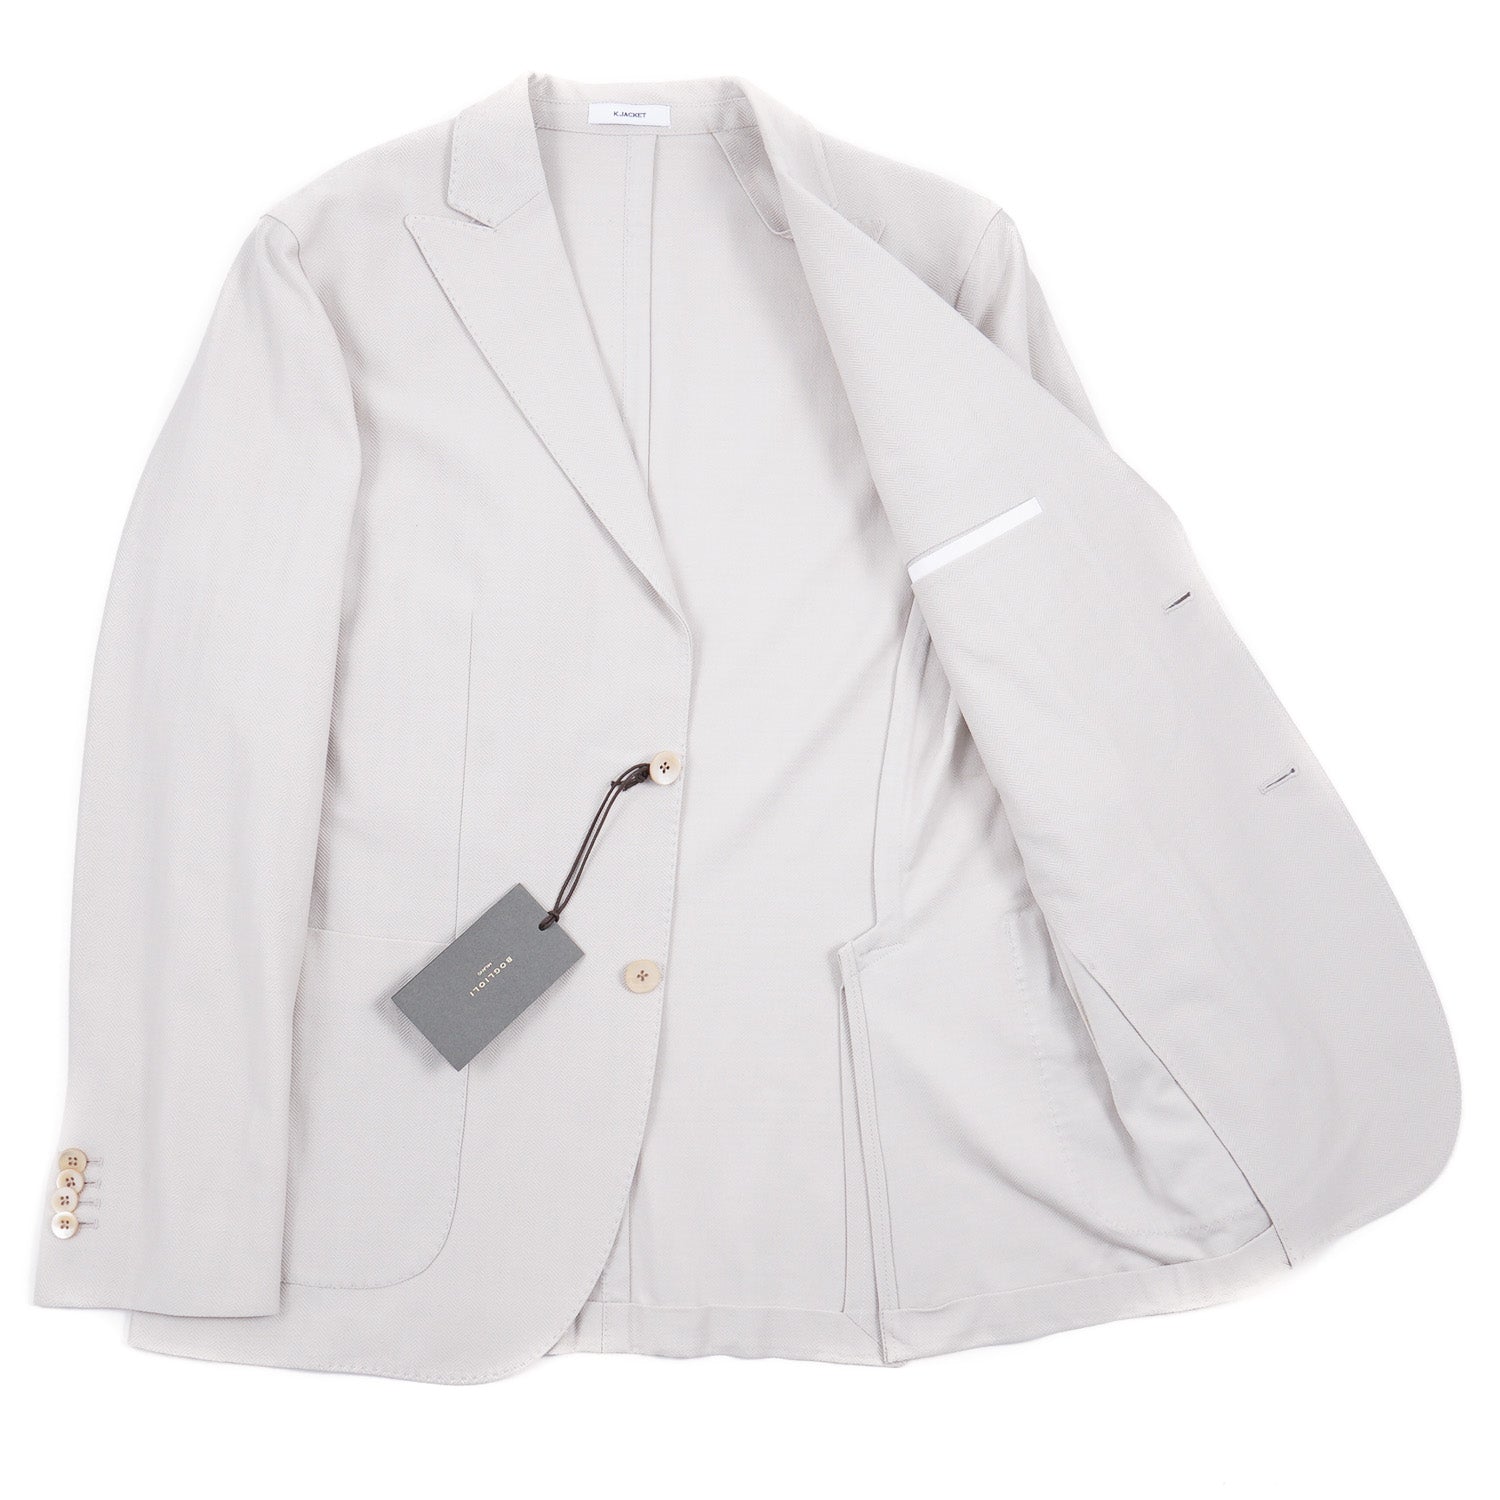 Boglioli 'K Jacket' Sport Coat with Peak Lapels - Top Shelf Apparel